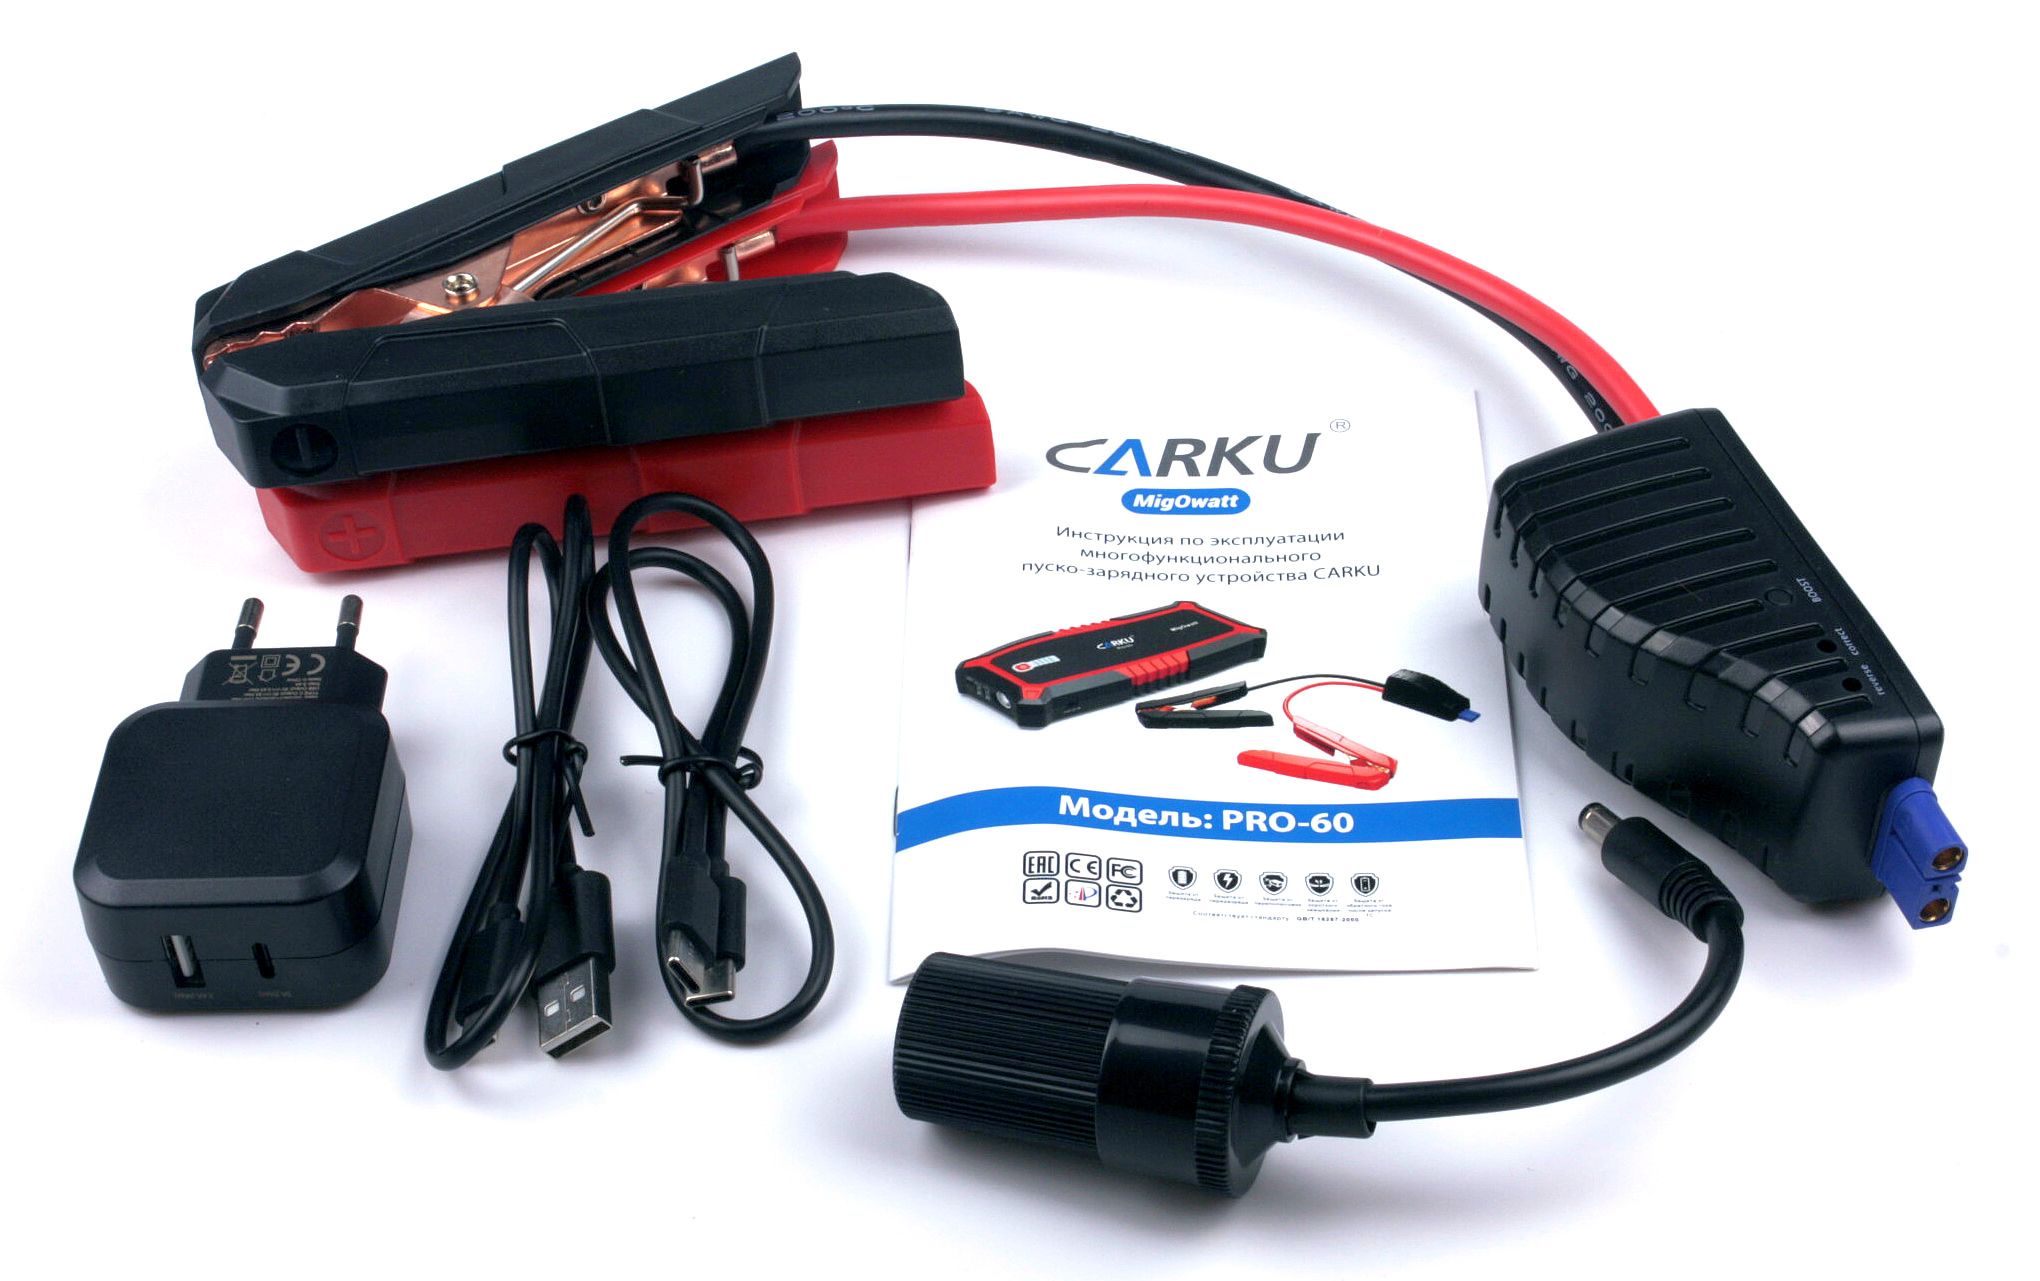 Carku pro купить. Carku Pro-60. Бустер Carku Pro 60. Пускач Carku Pro 60. Портативное пуско-зарядное устройство, 25000 Mah Carku Pro-60.